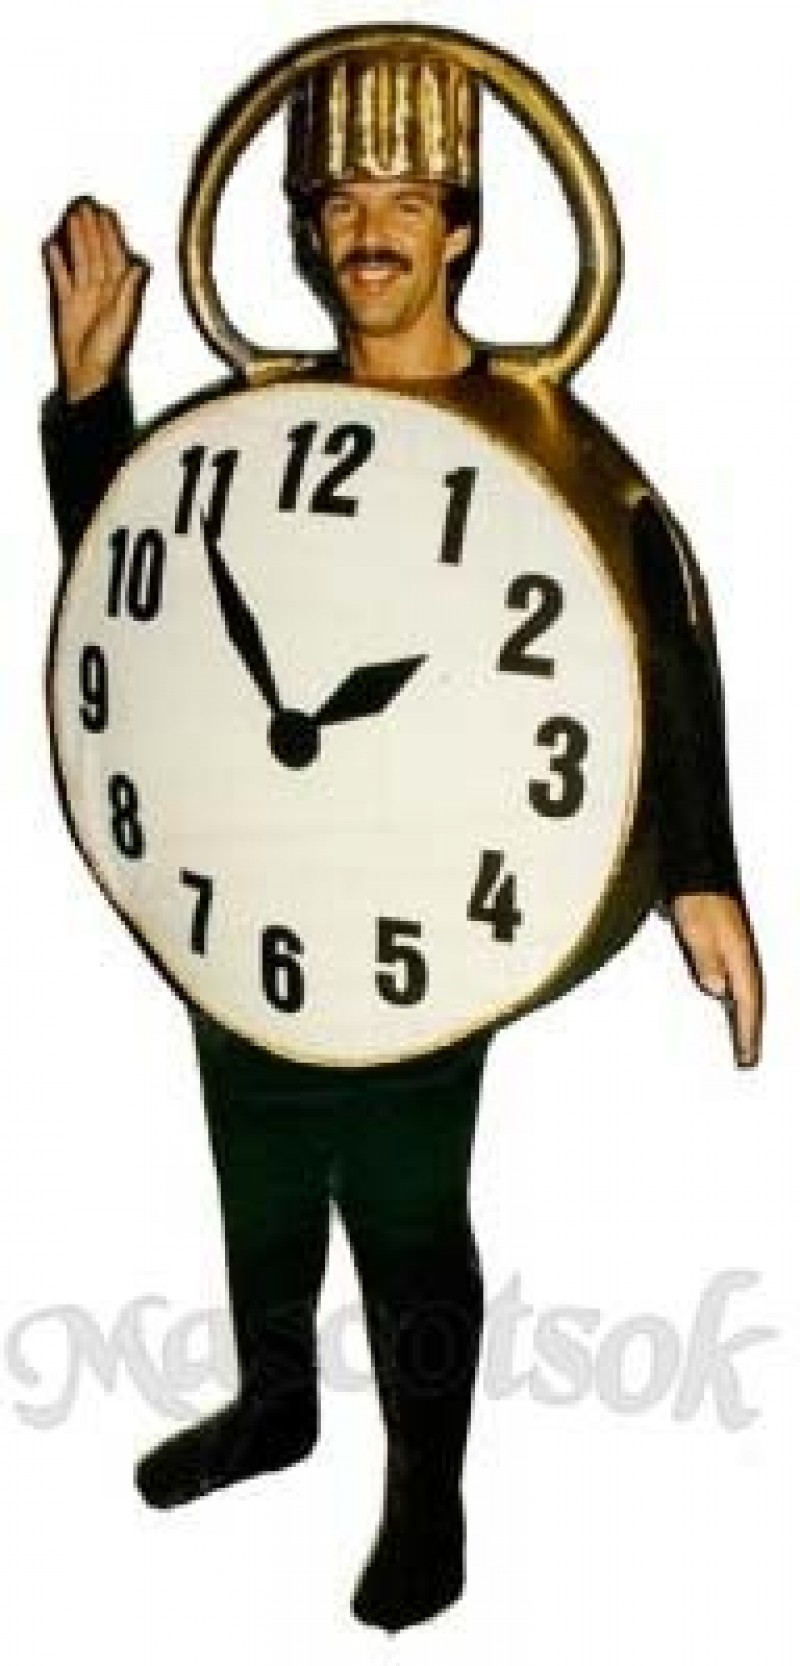 Clock Mascot Costume